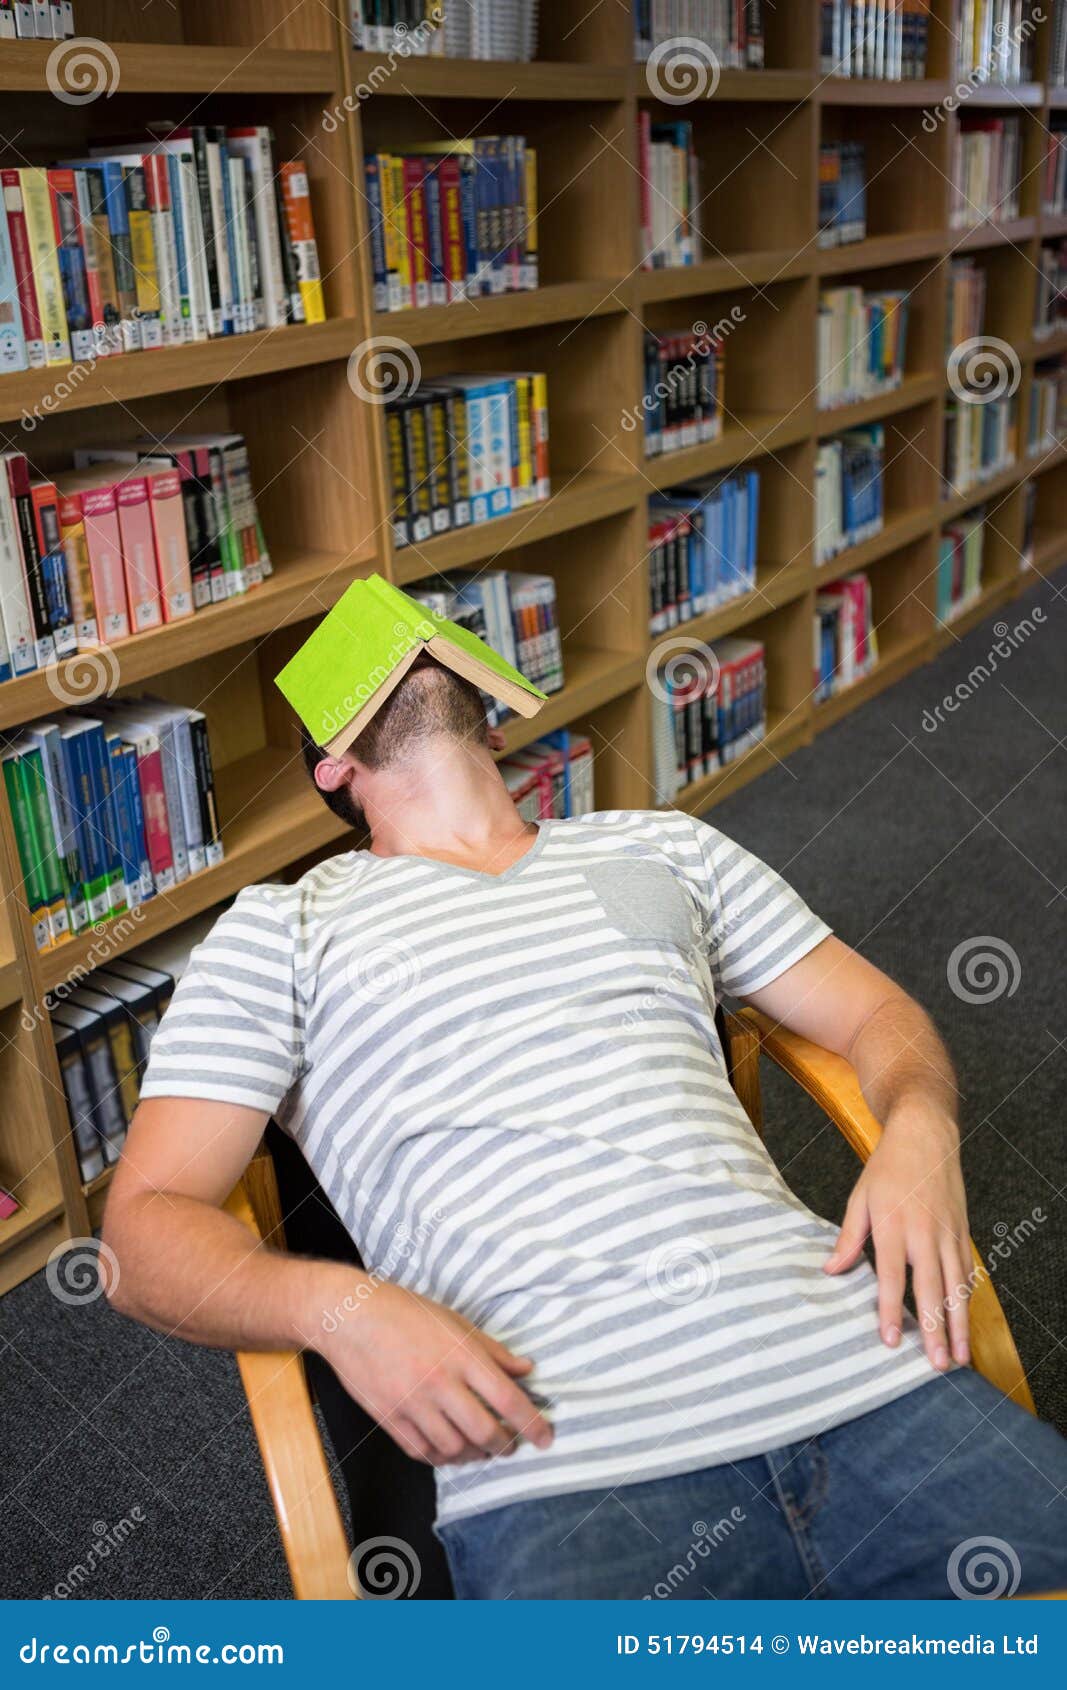 student-asleep-library-book-his-face-university-51794514.jpg